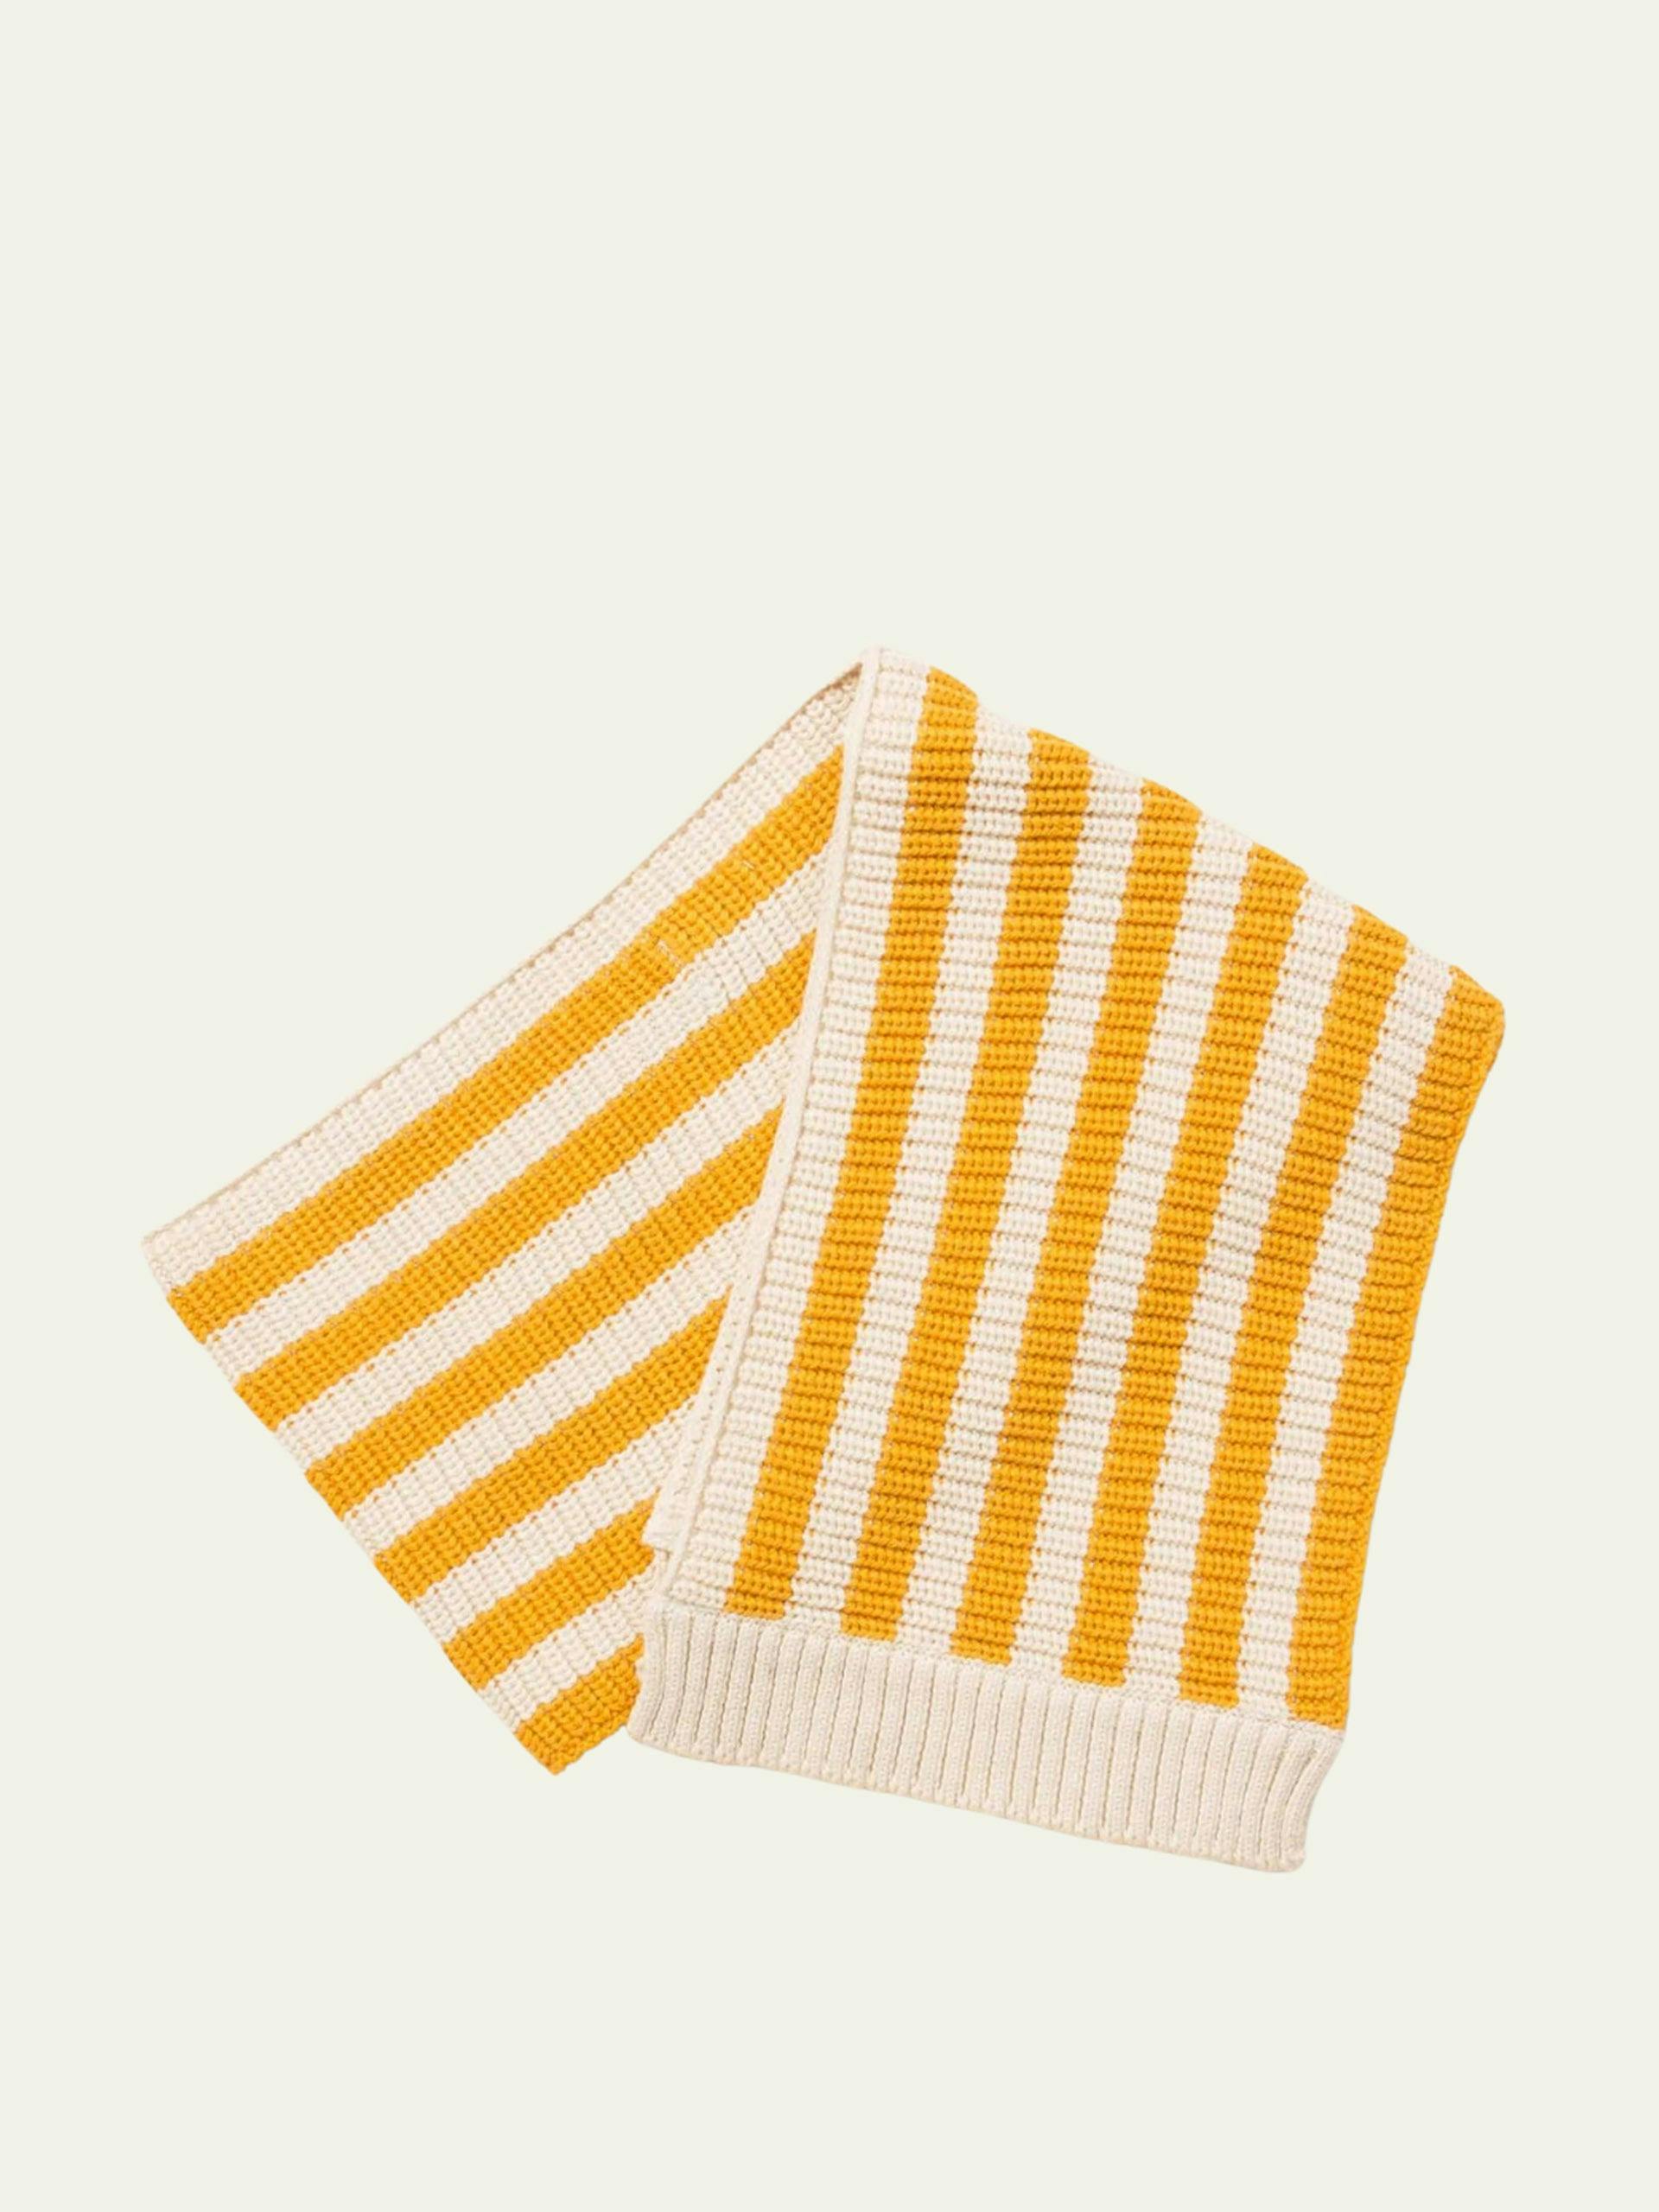 Gold striped knit scarf